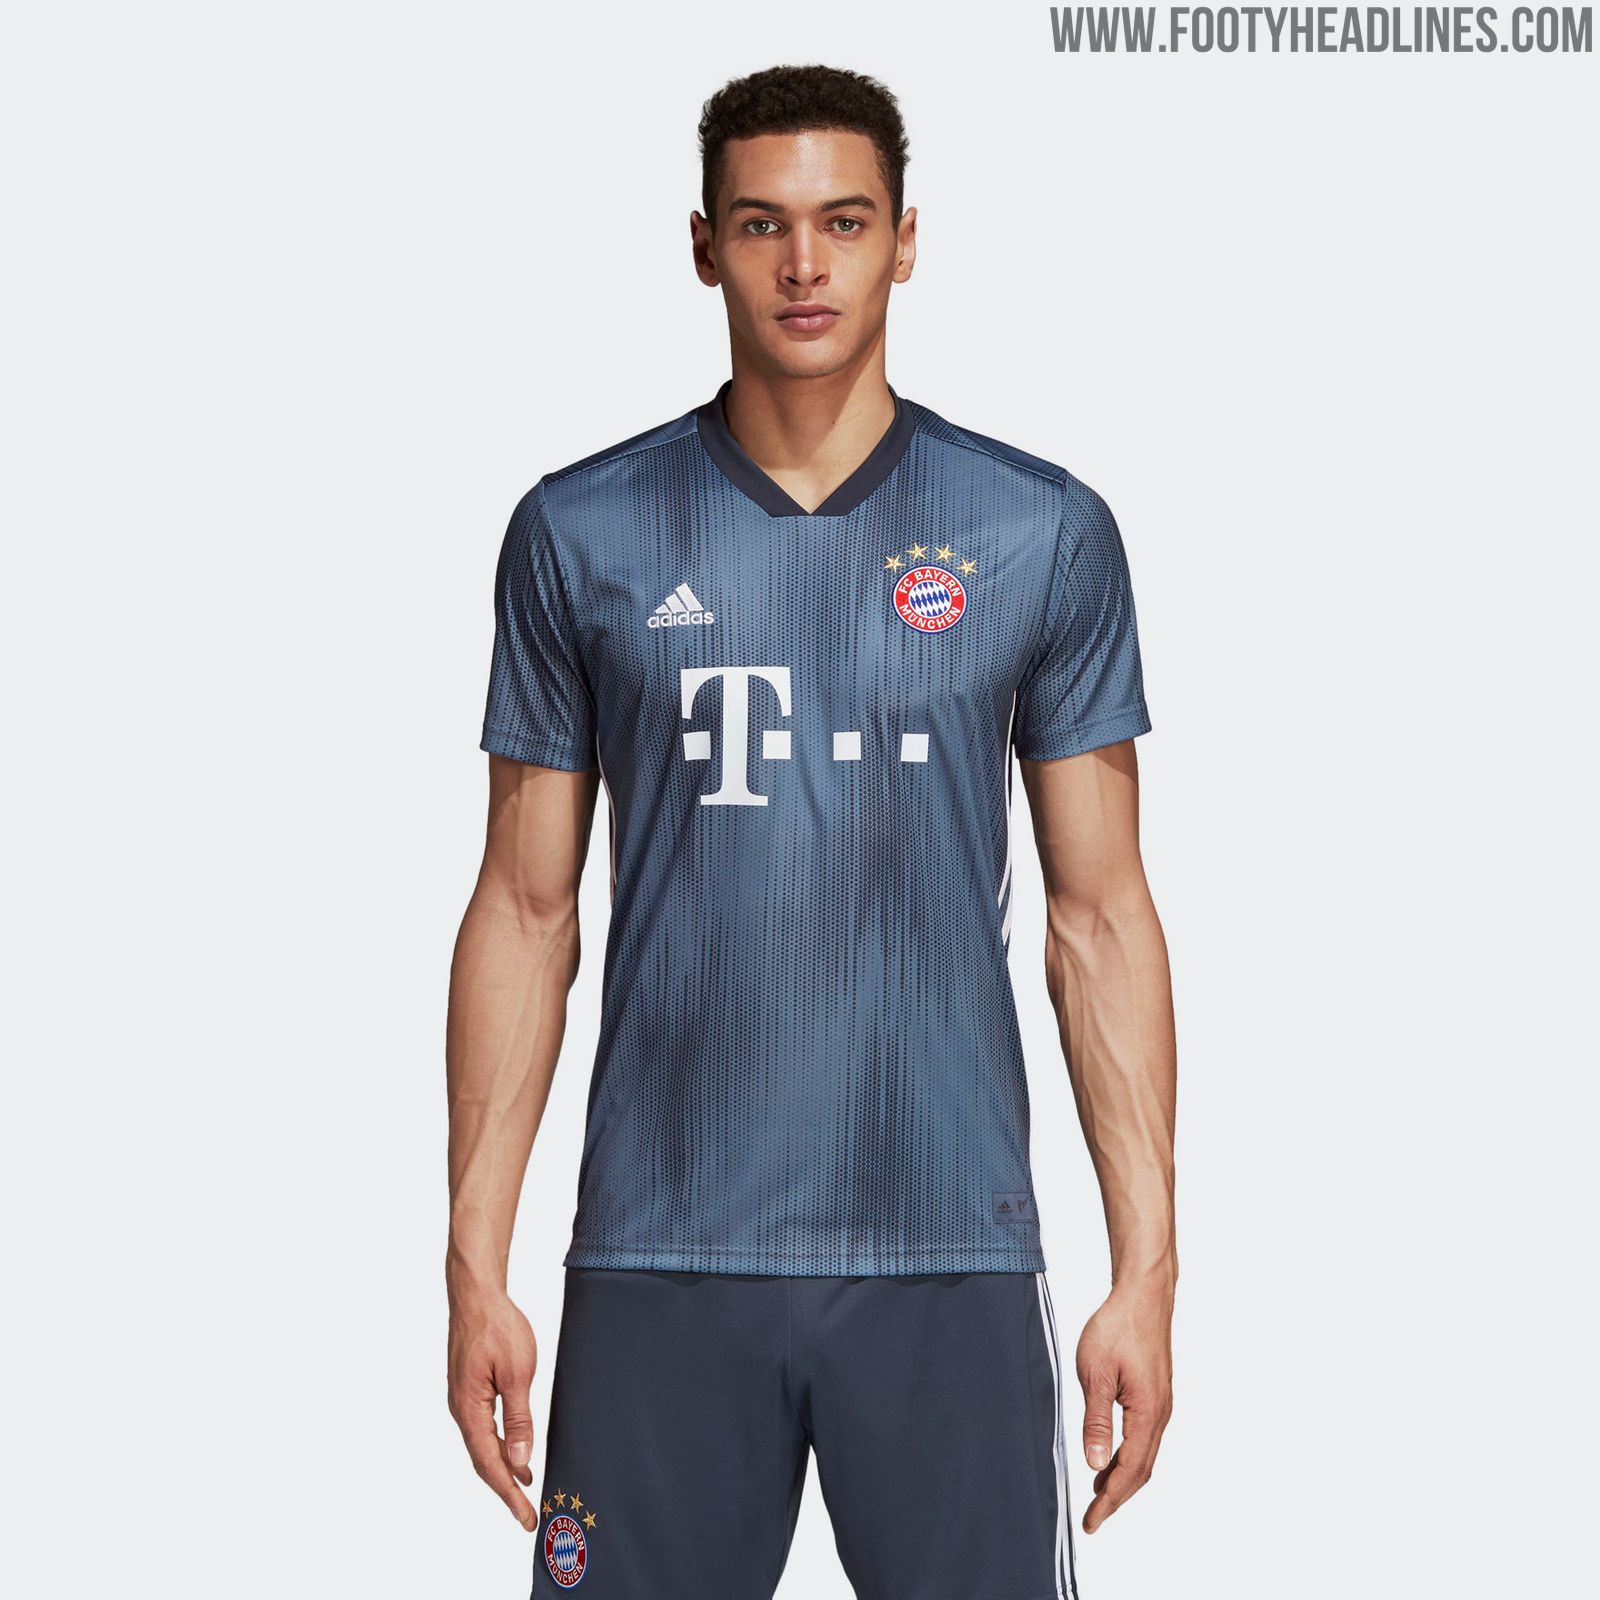 Bayern München 18-19 Third Kit Released - Footy Headlines